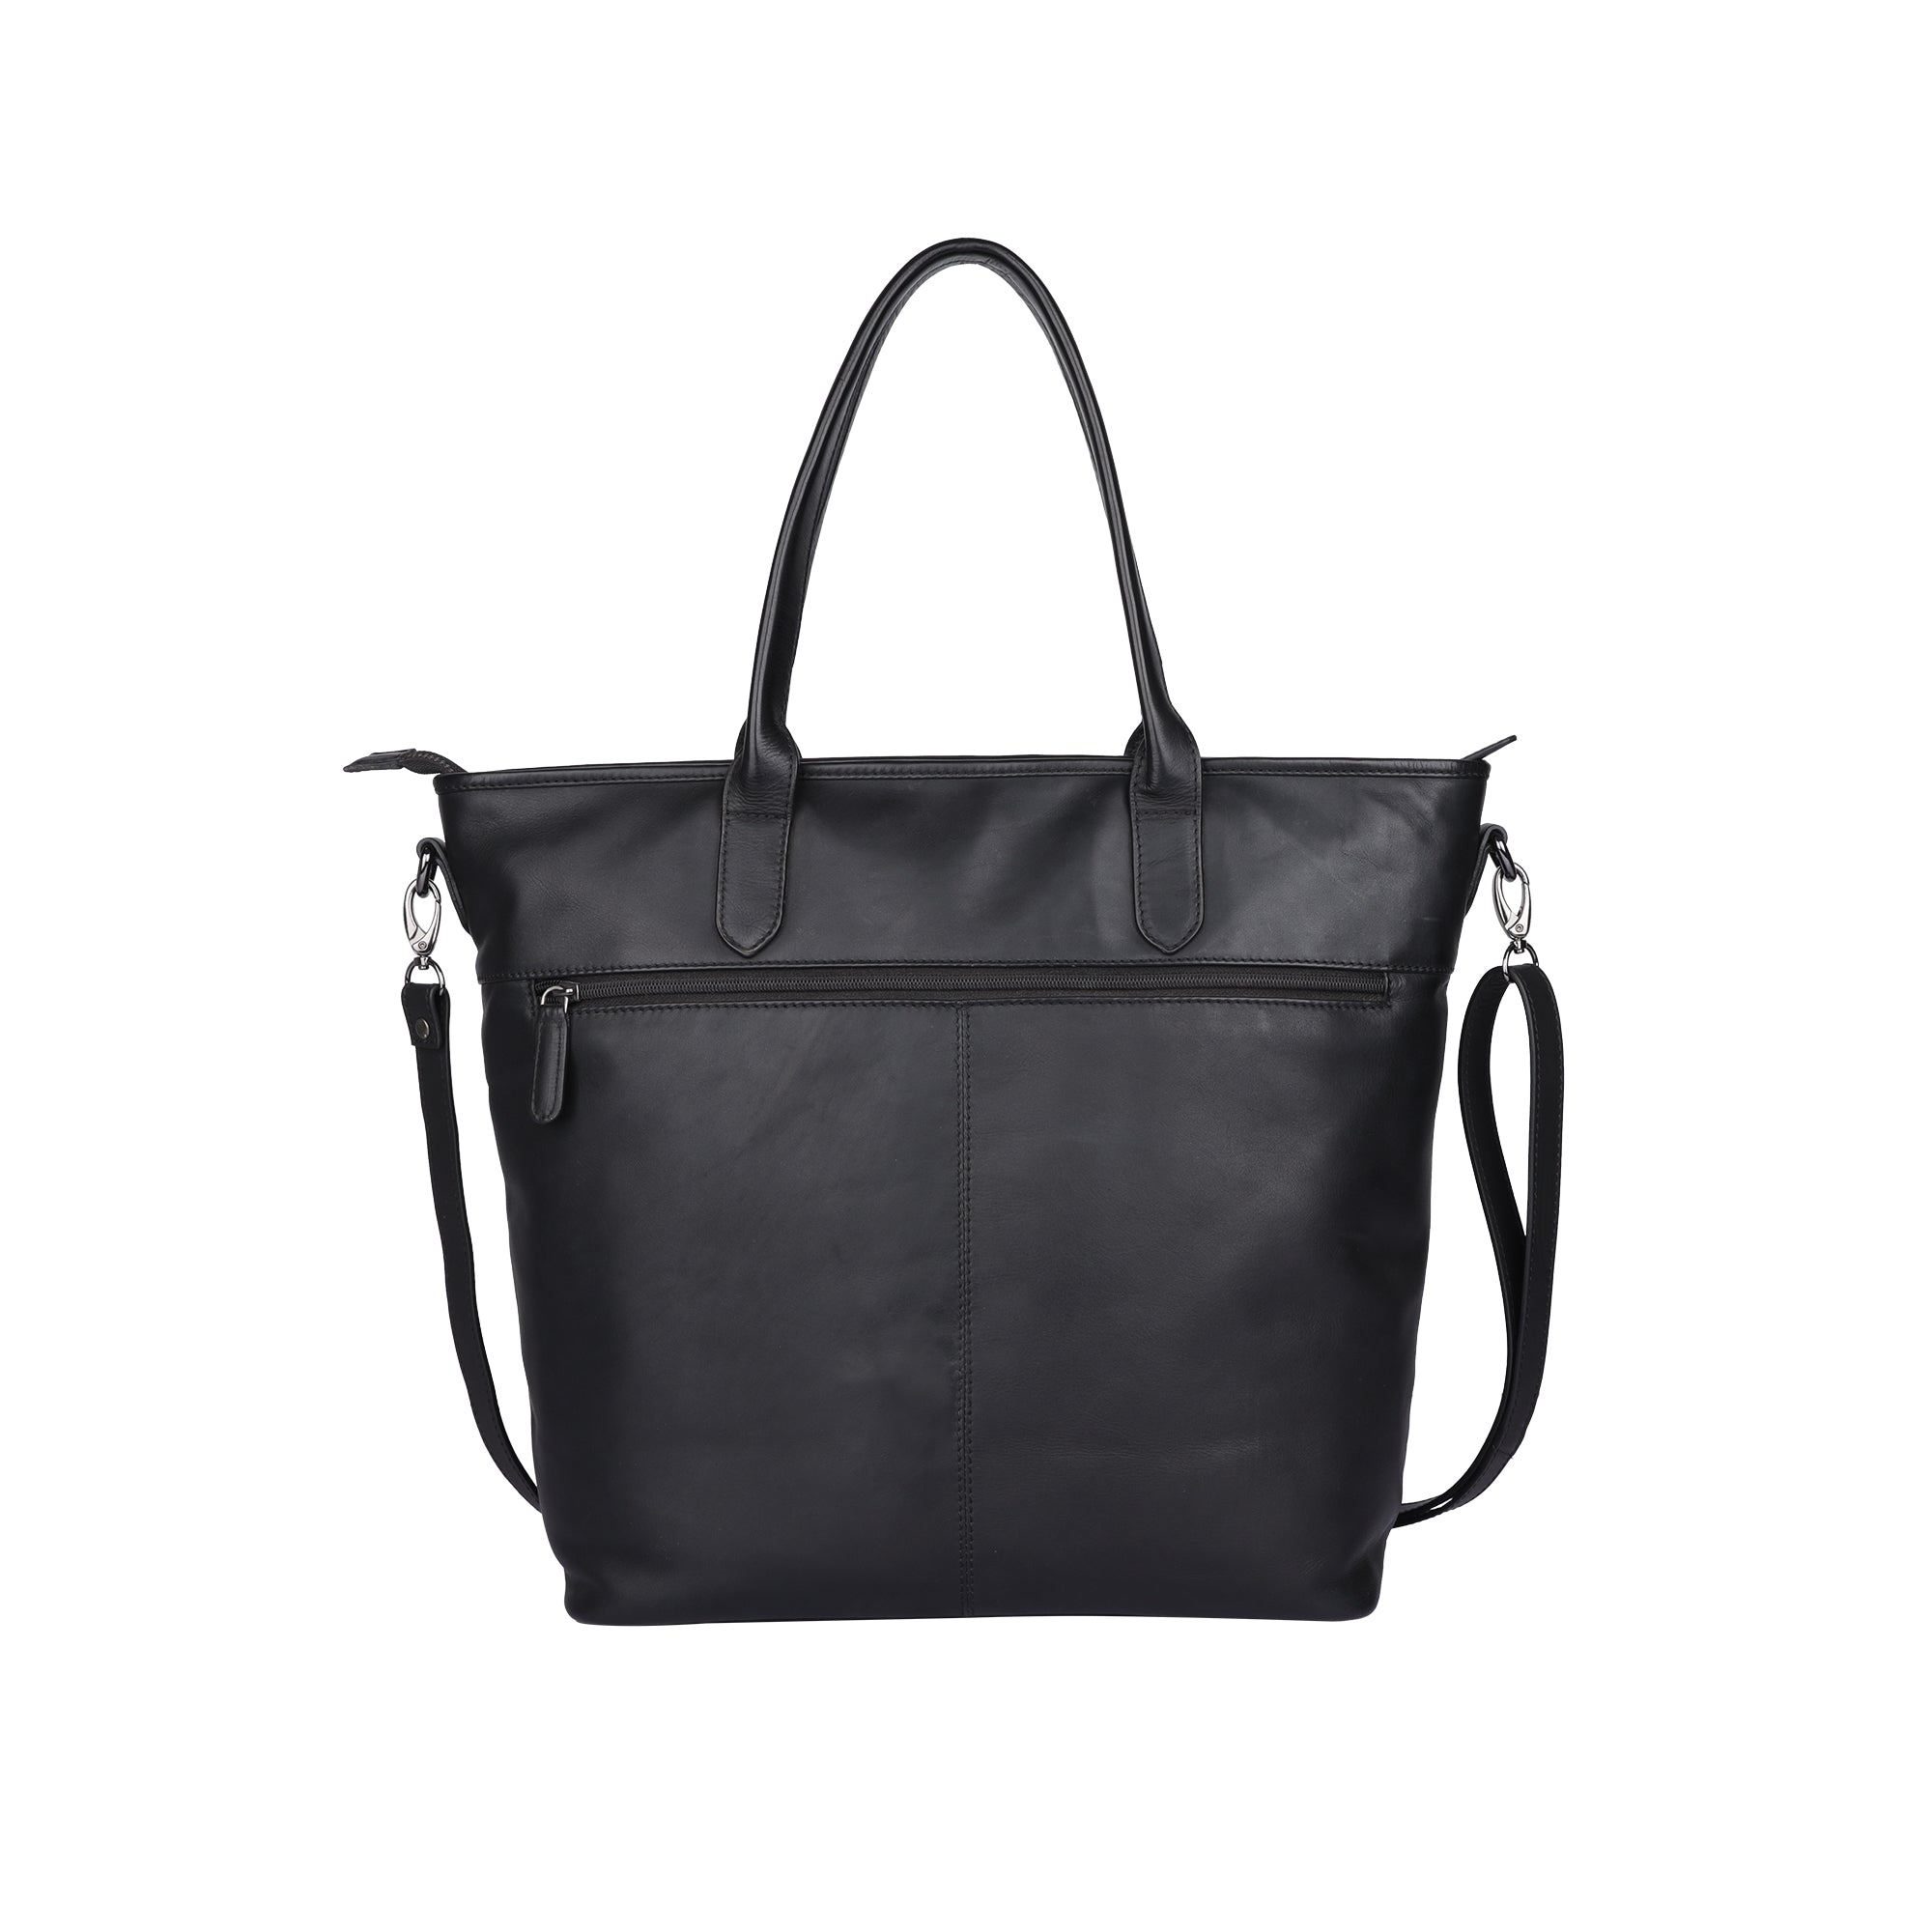 Lilly - Leder Shopper / Handtasche